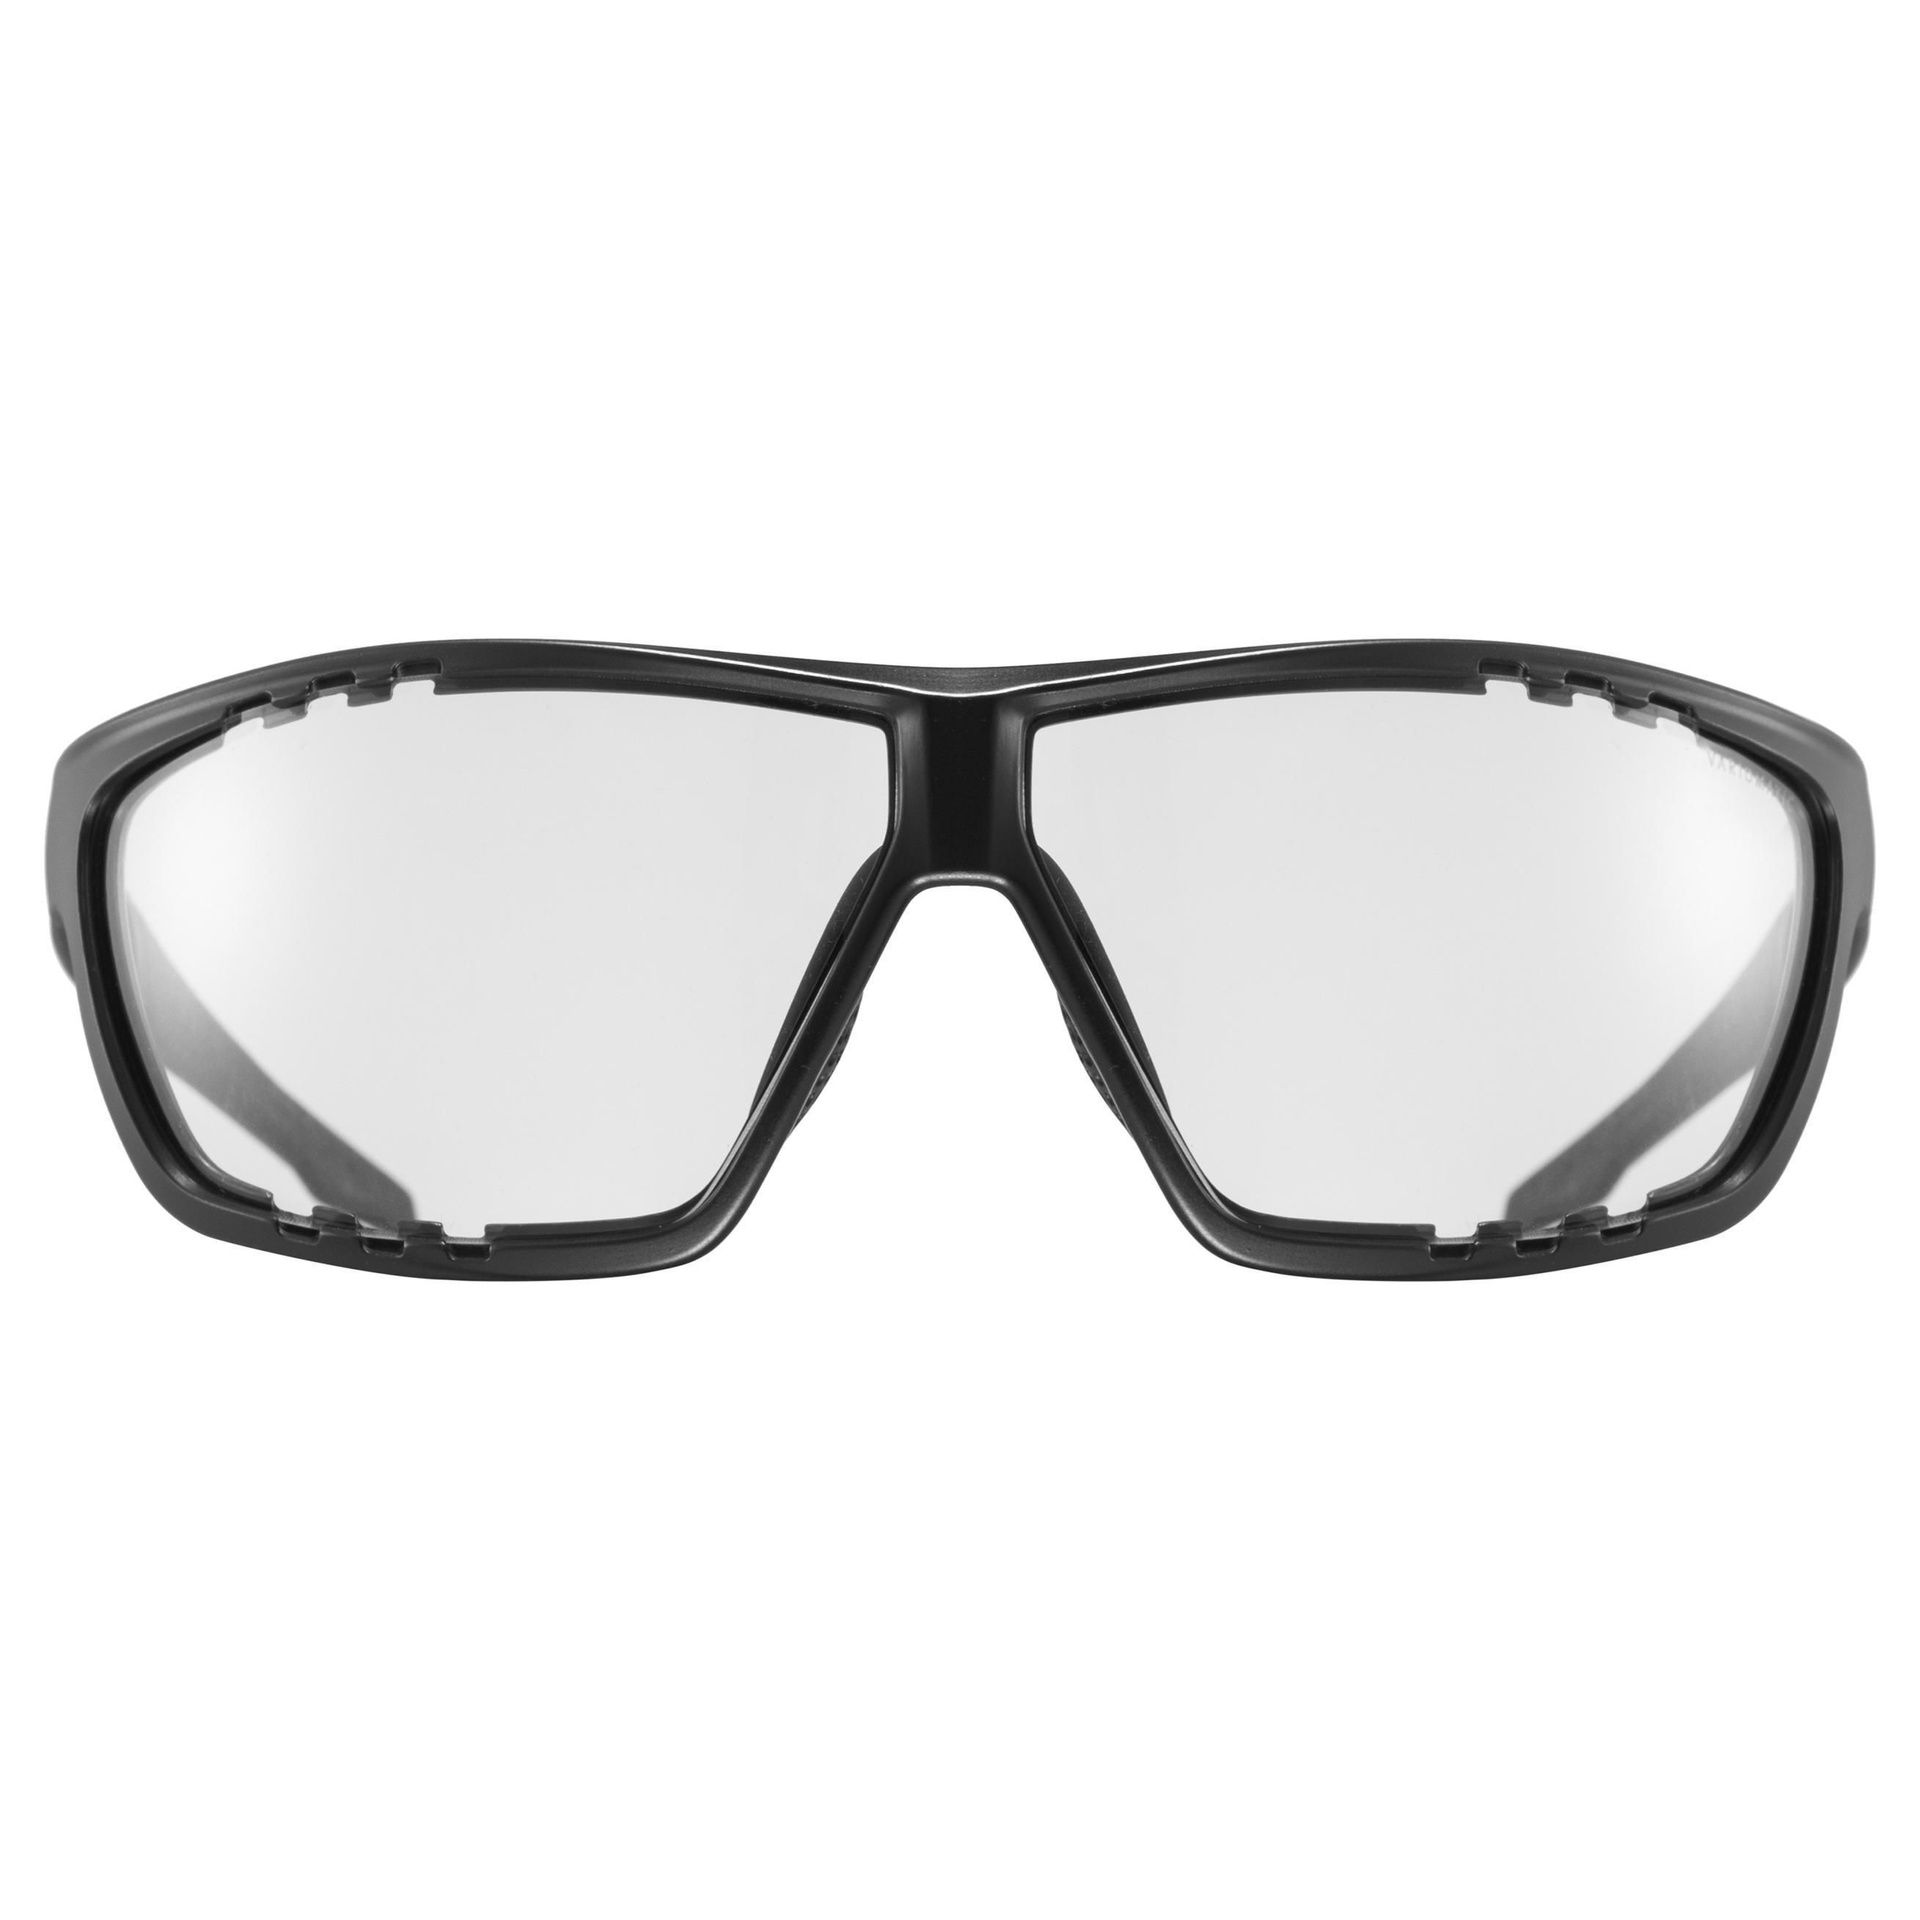 slnečné okuliare uvex sportstyle 706 V black mat